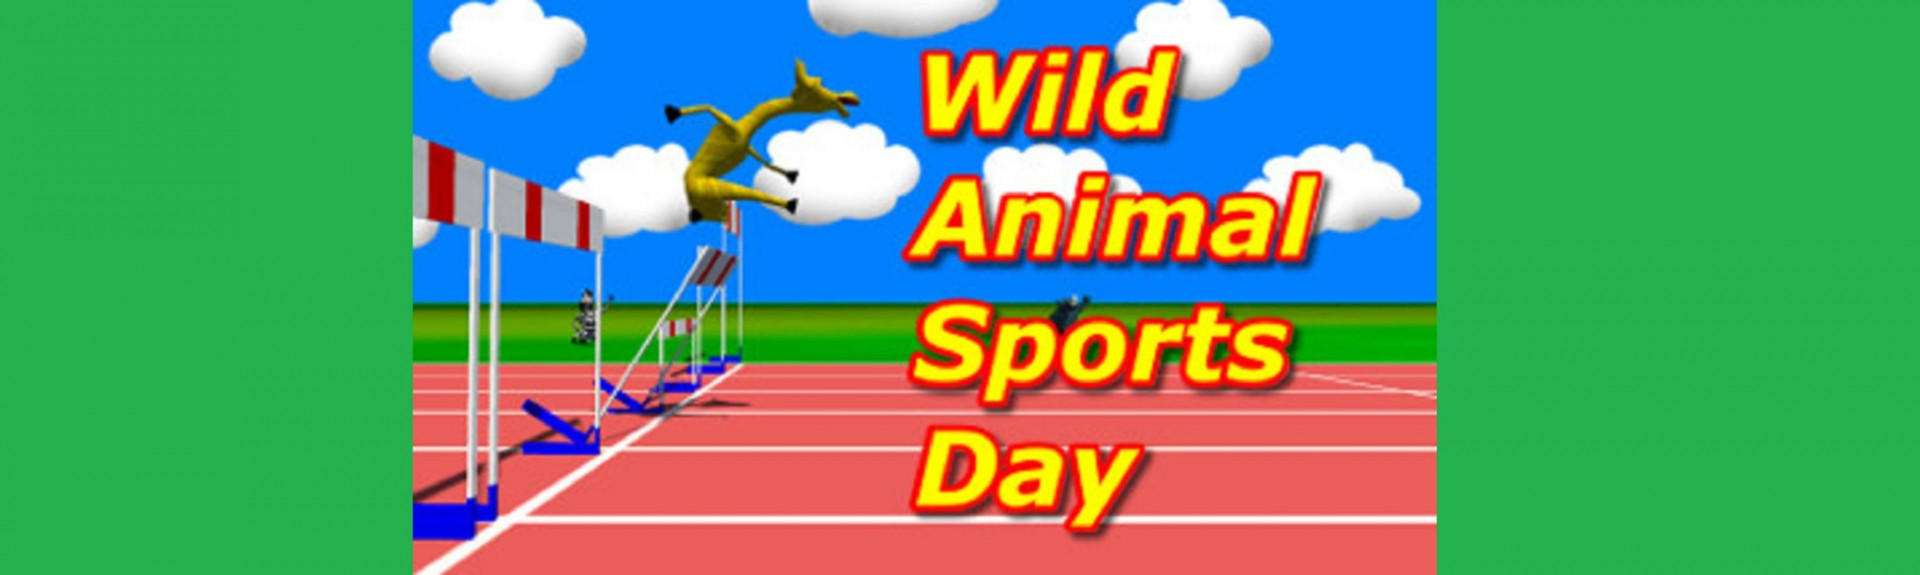 Wild Animal Sports Day